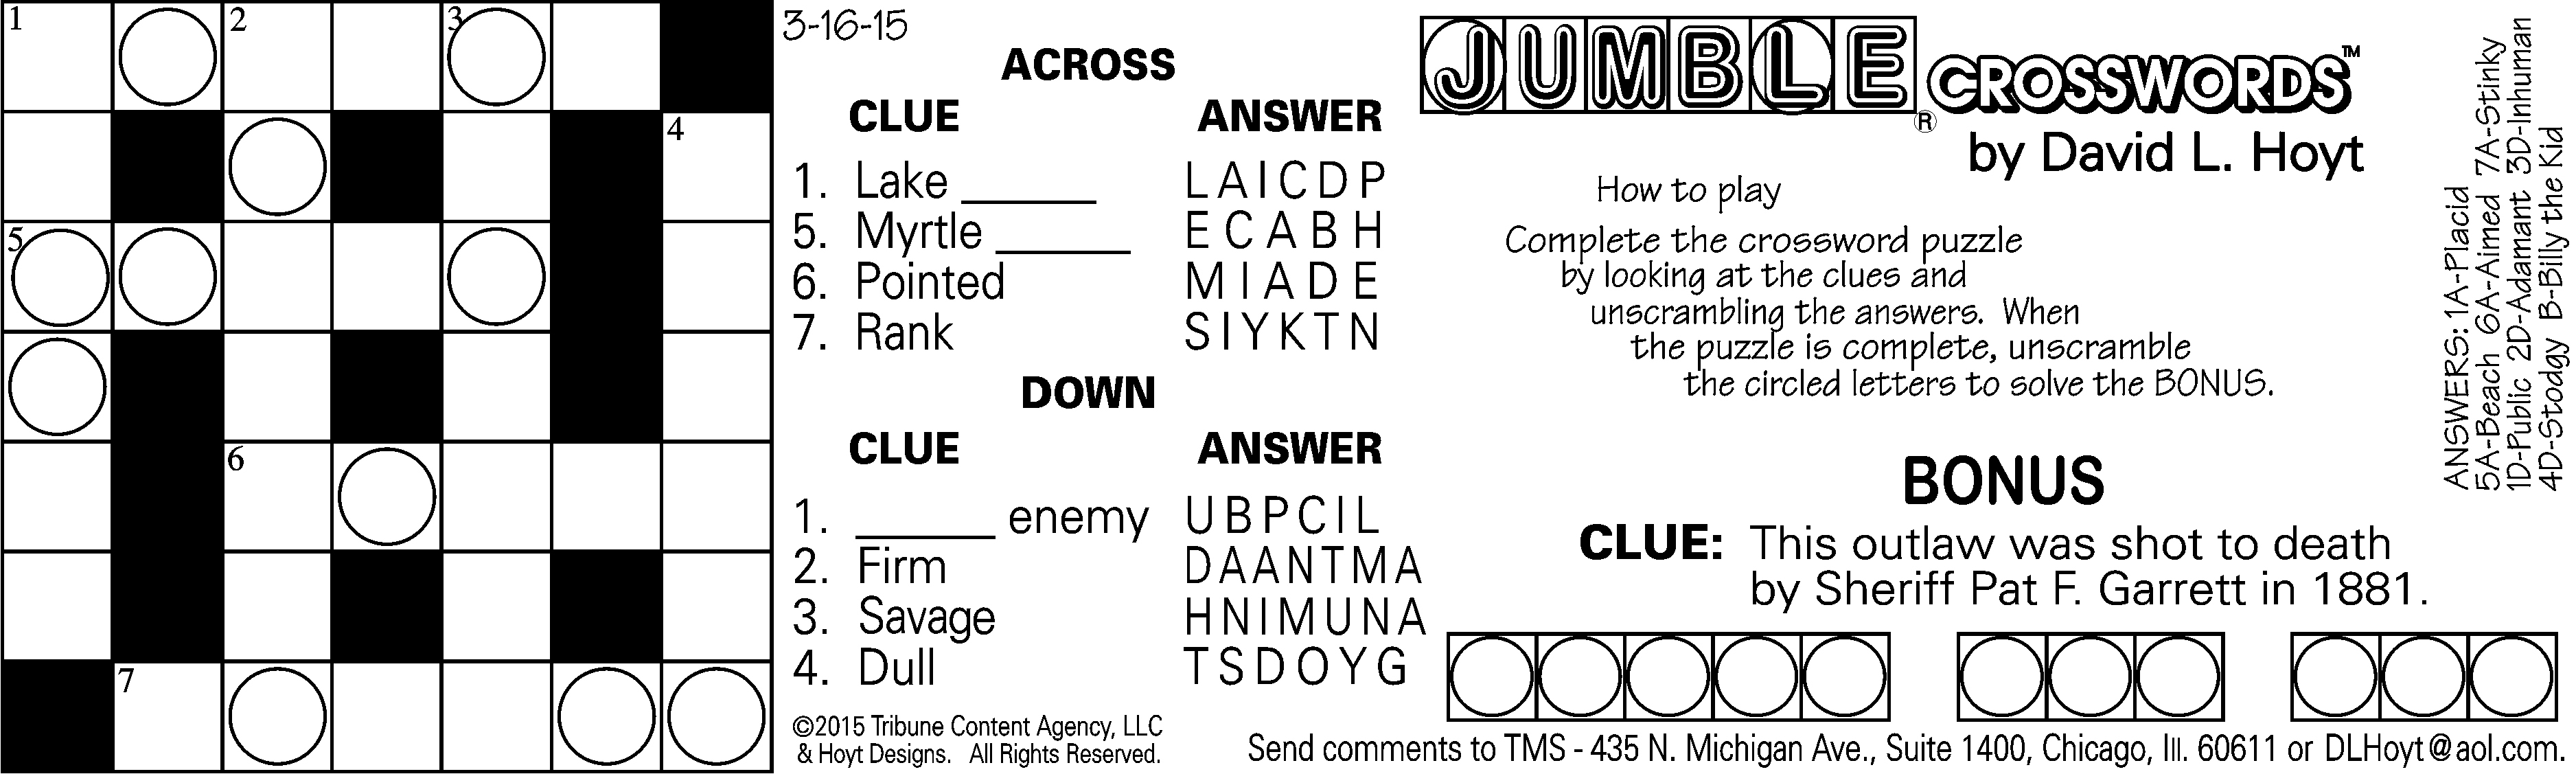 Printable Jumble Crosswords